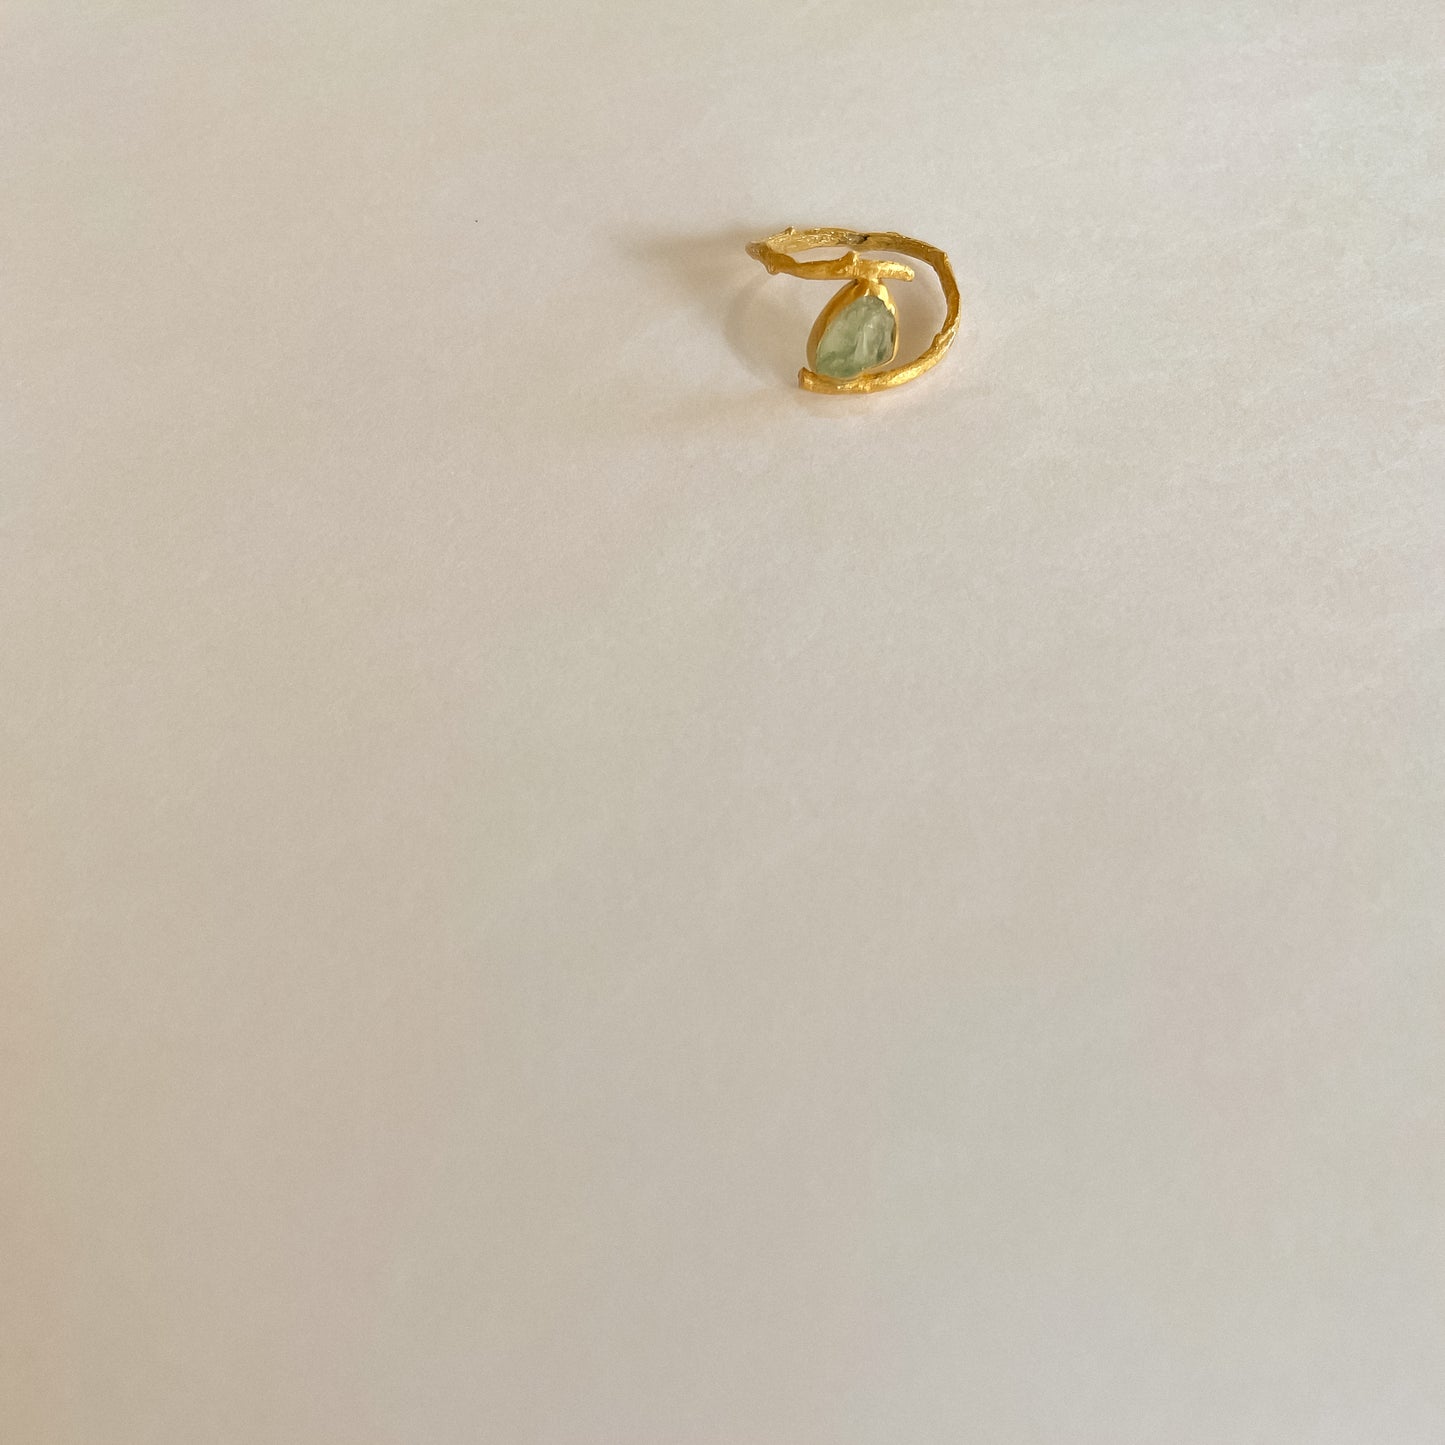 Aquamarine-rough-cut-gold-plated-twig-ring